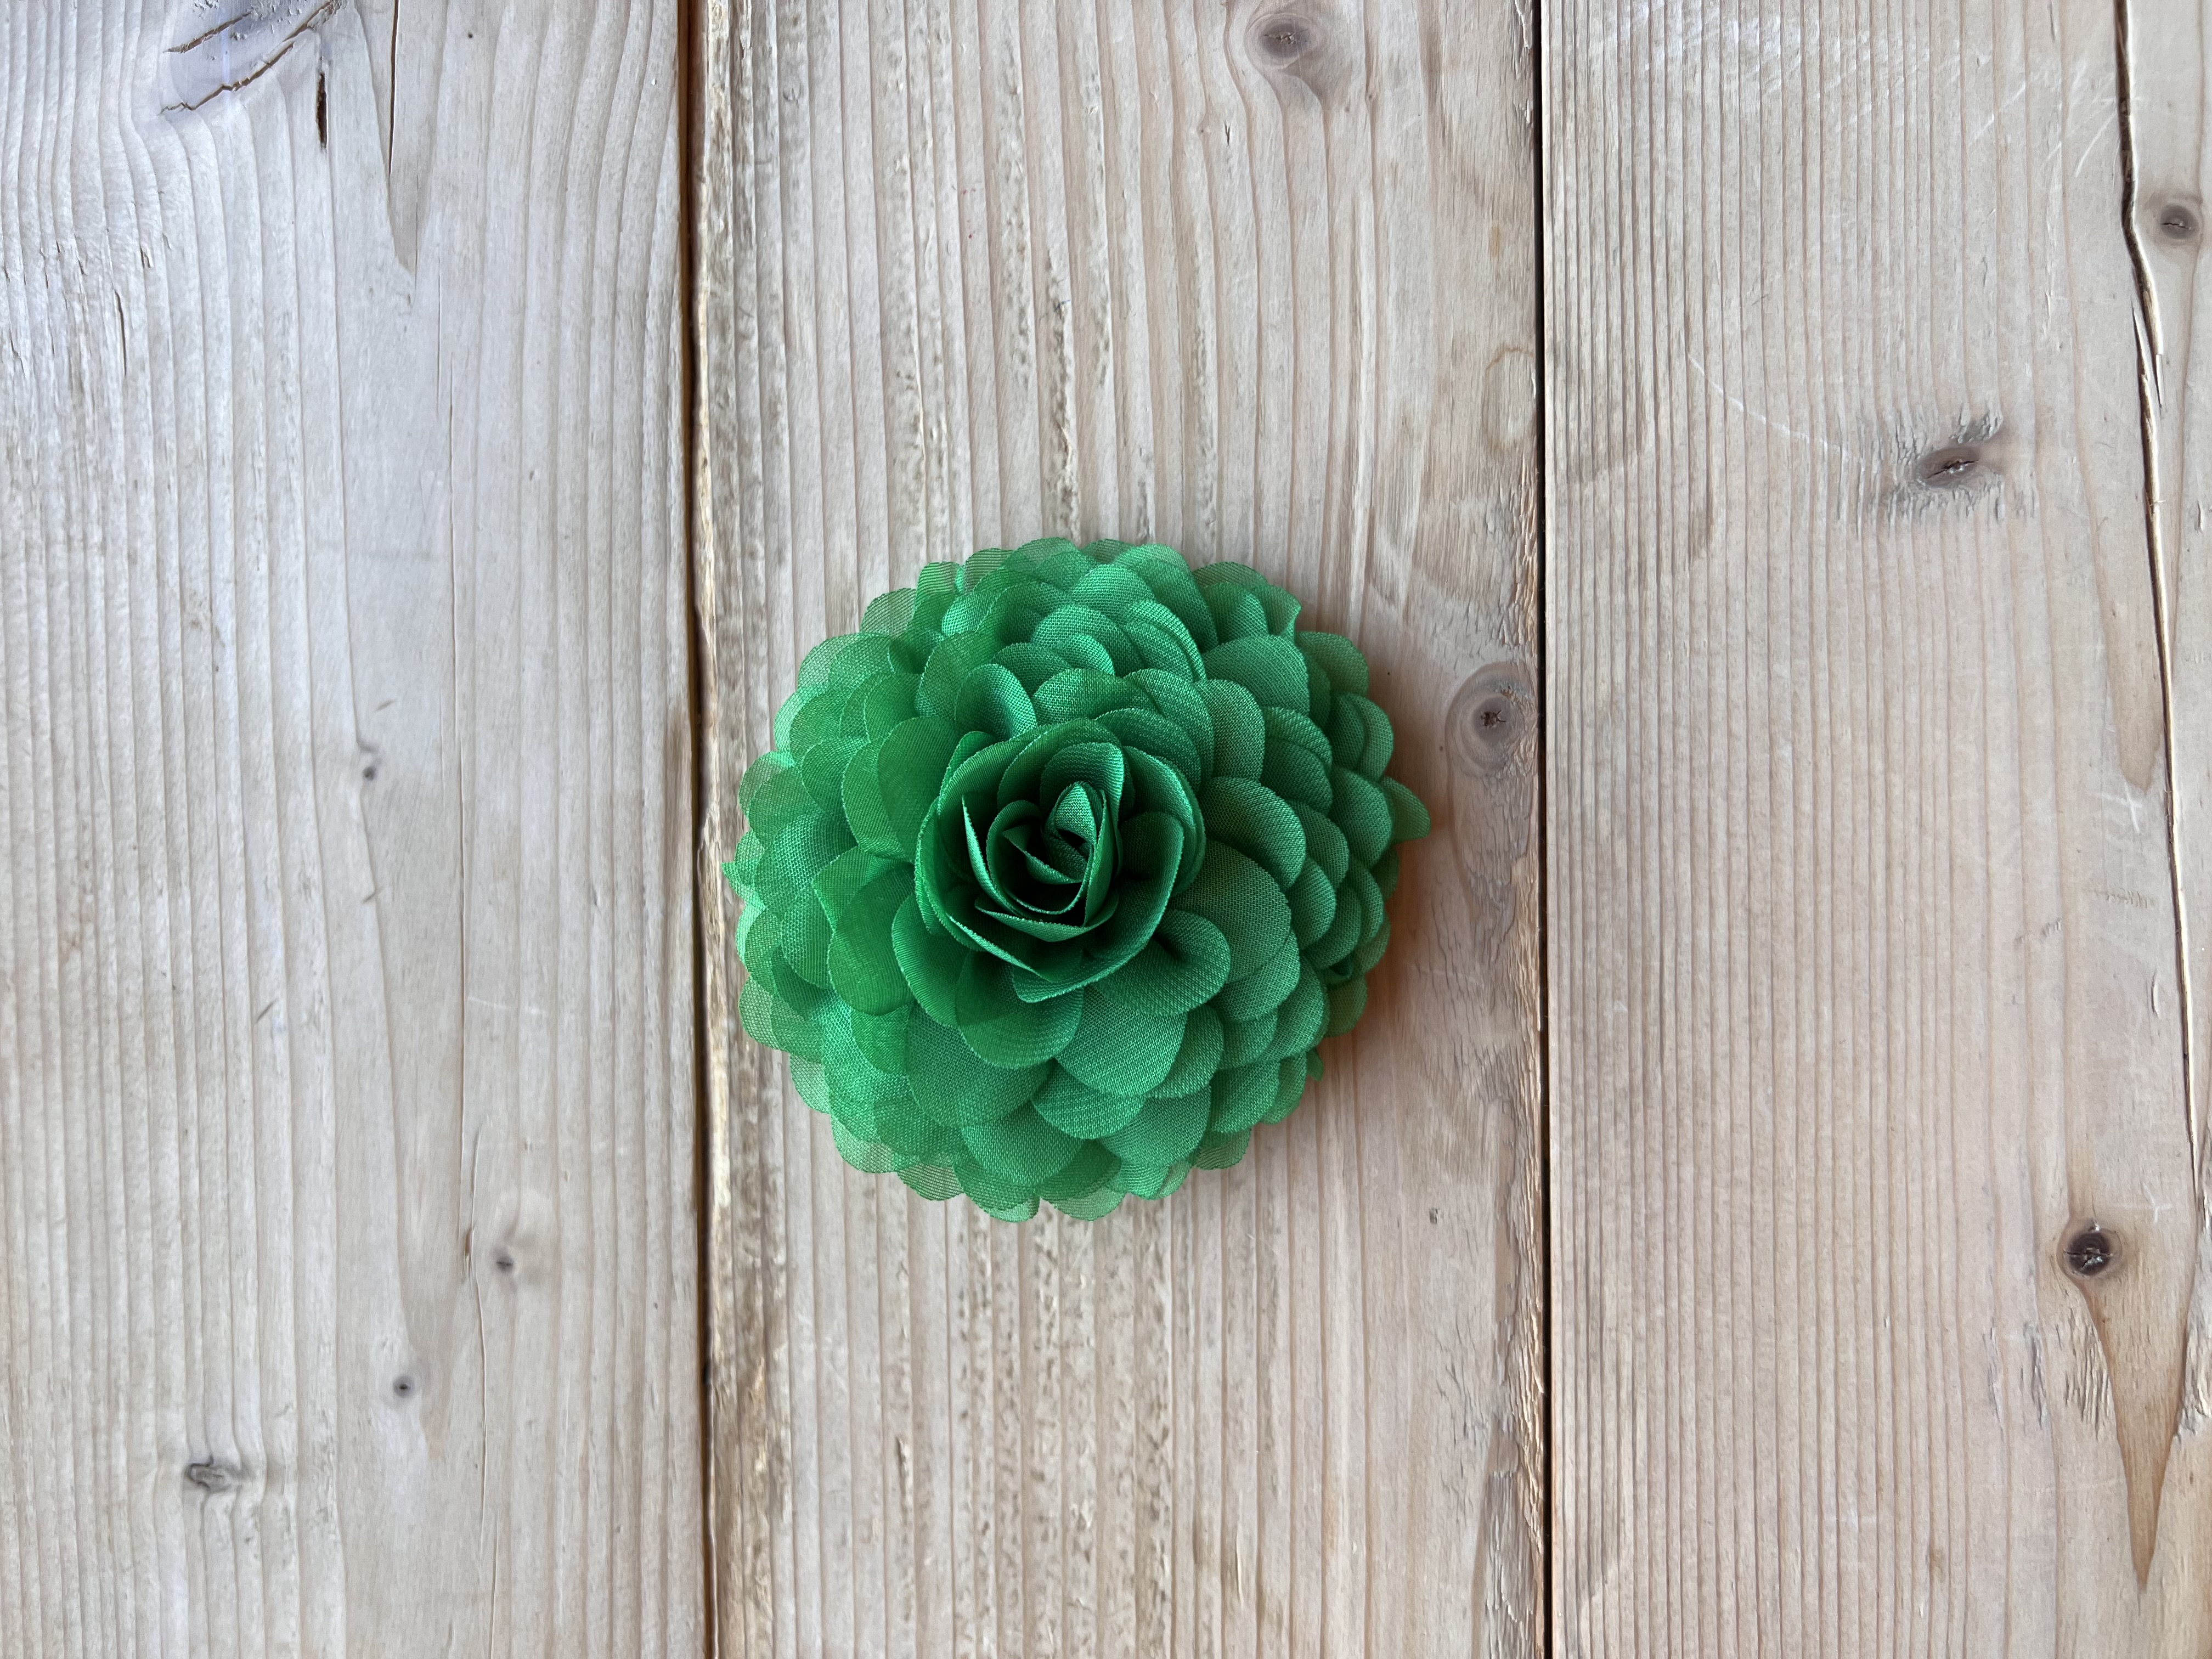 Retro Stil Accessoire - Chiffon Blume in Grün